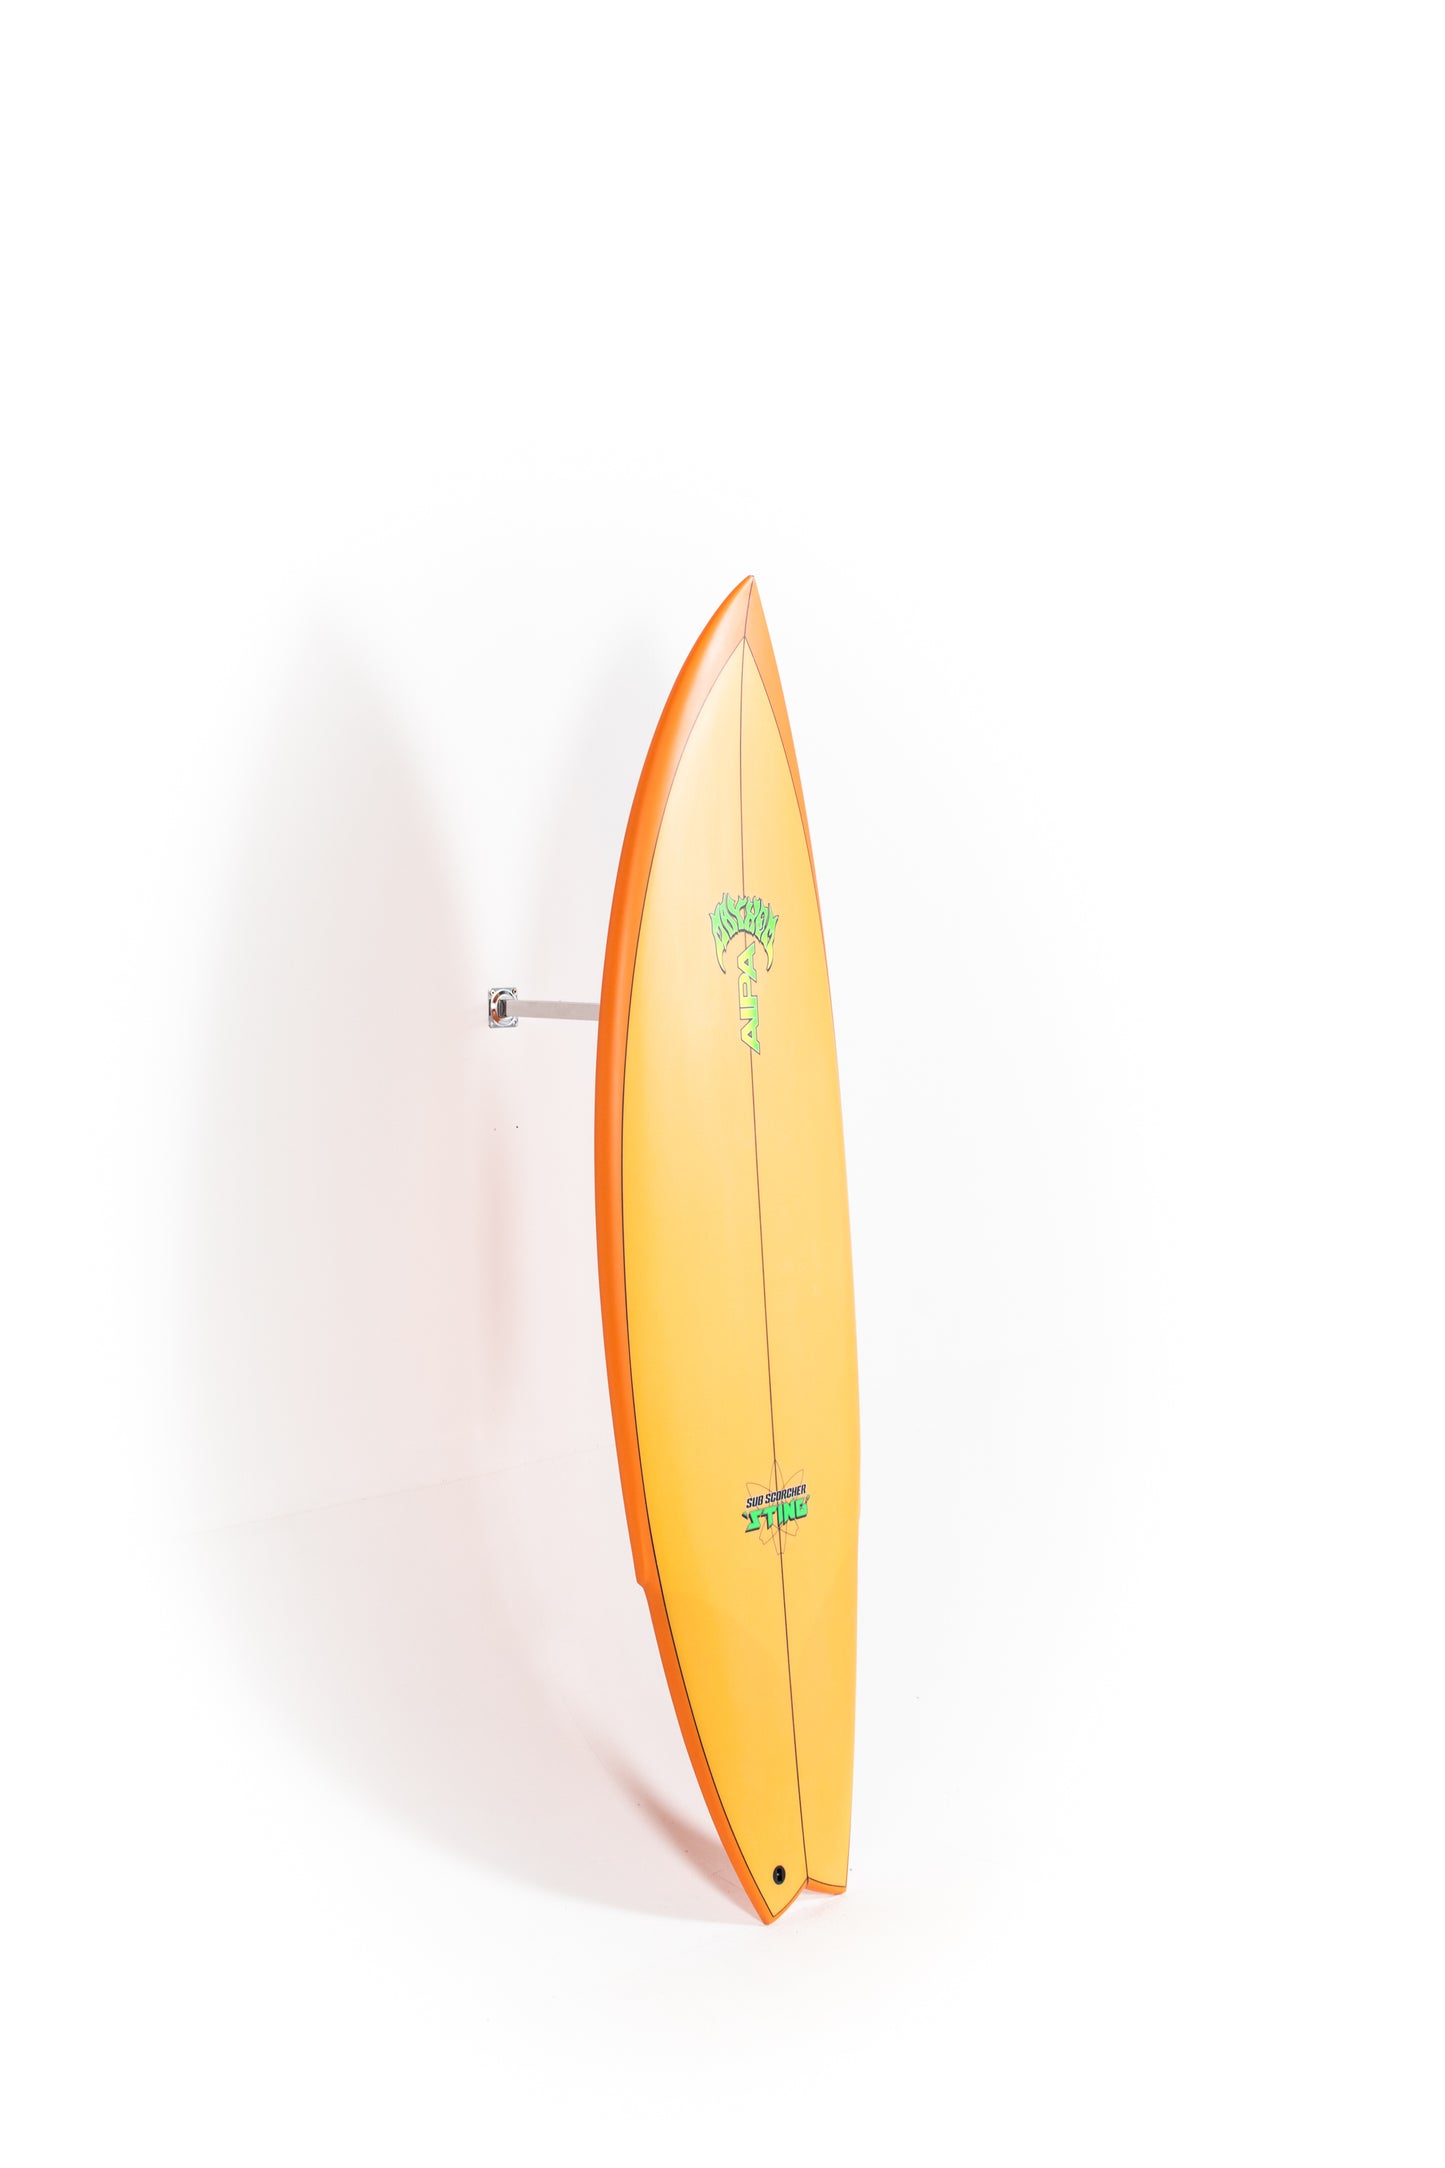 Lost Surfboard - SUB SCORCHER STING by Mayhem x Aipa - 6'1” x 20 